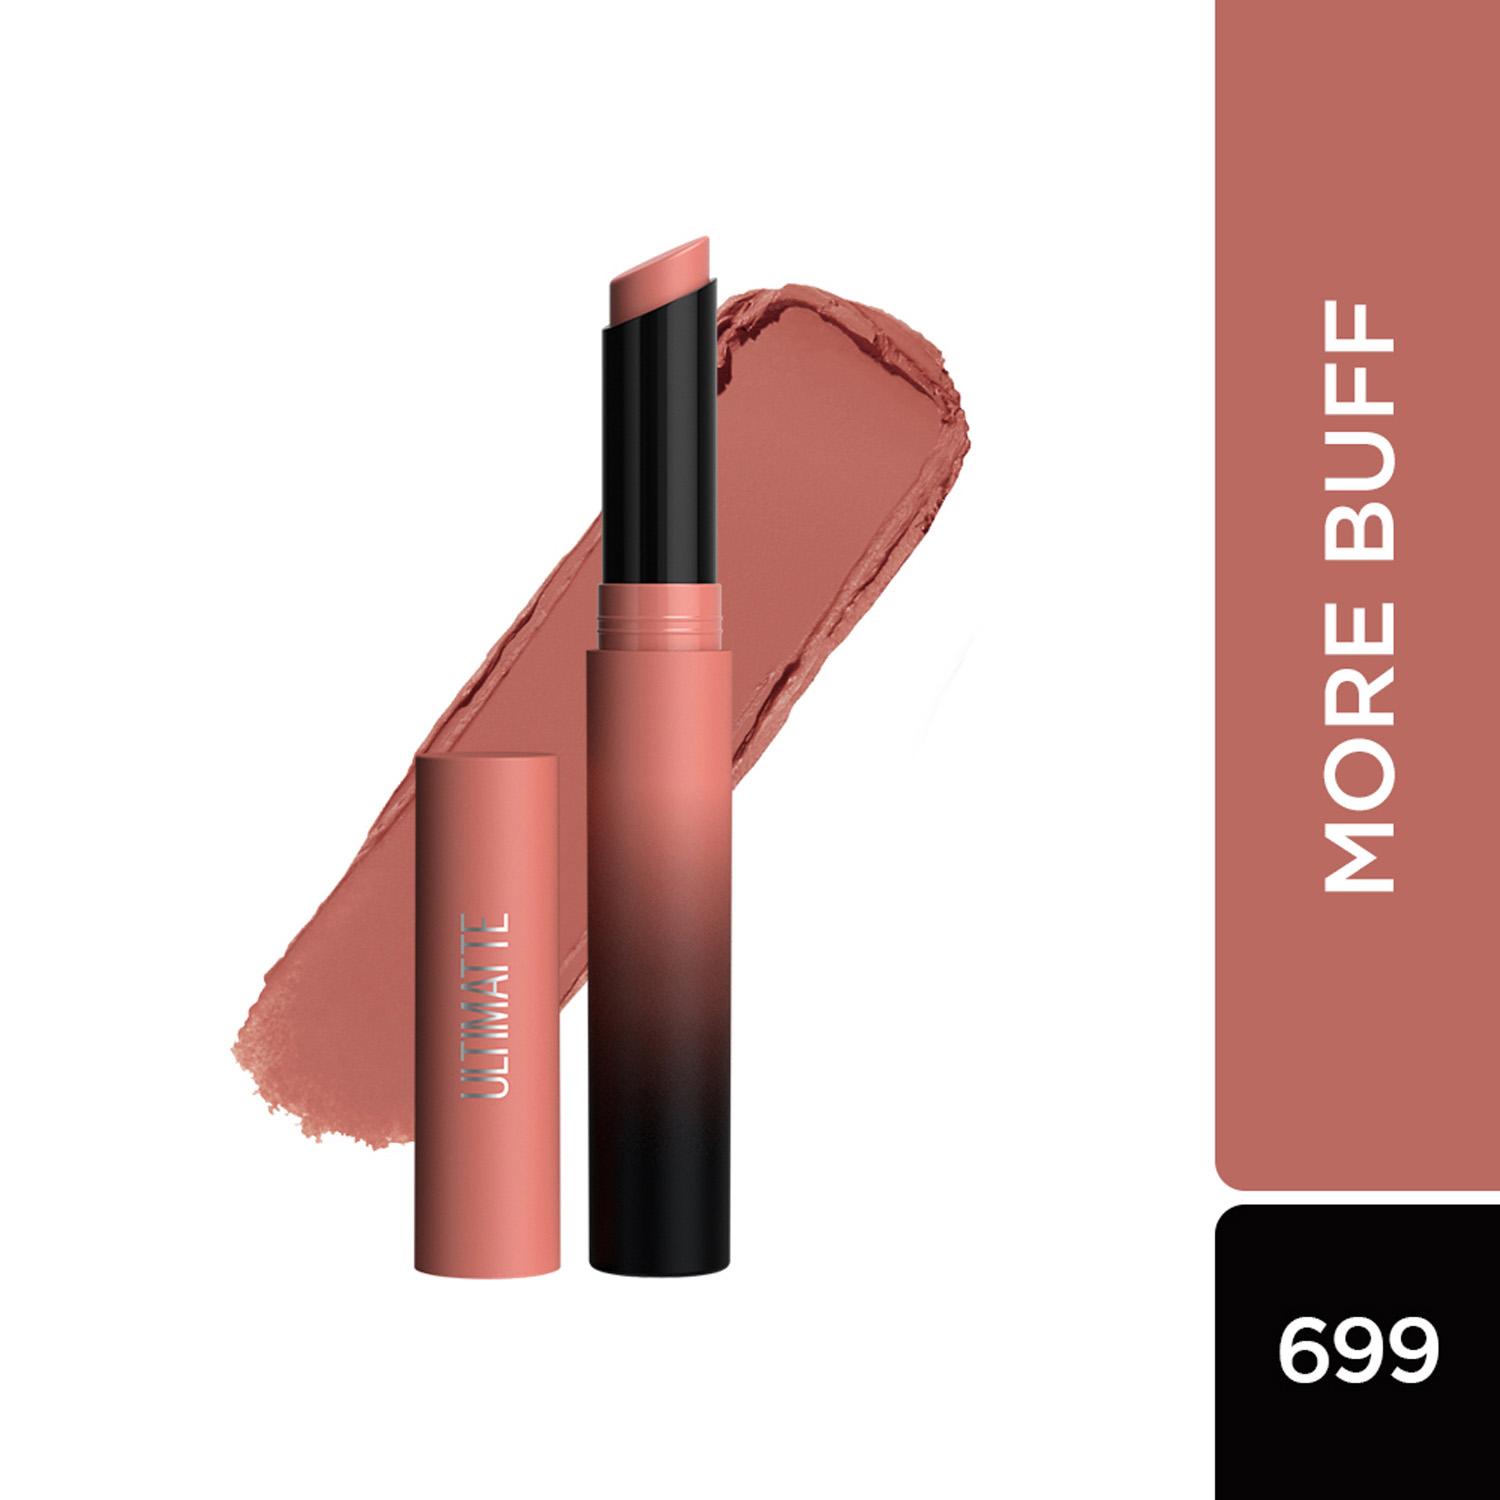 Maybelline New York | Maybelline New York Color Sensational Ultimattes Lipstick - More Buff (1.7g)